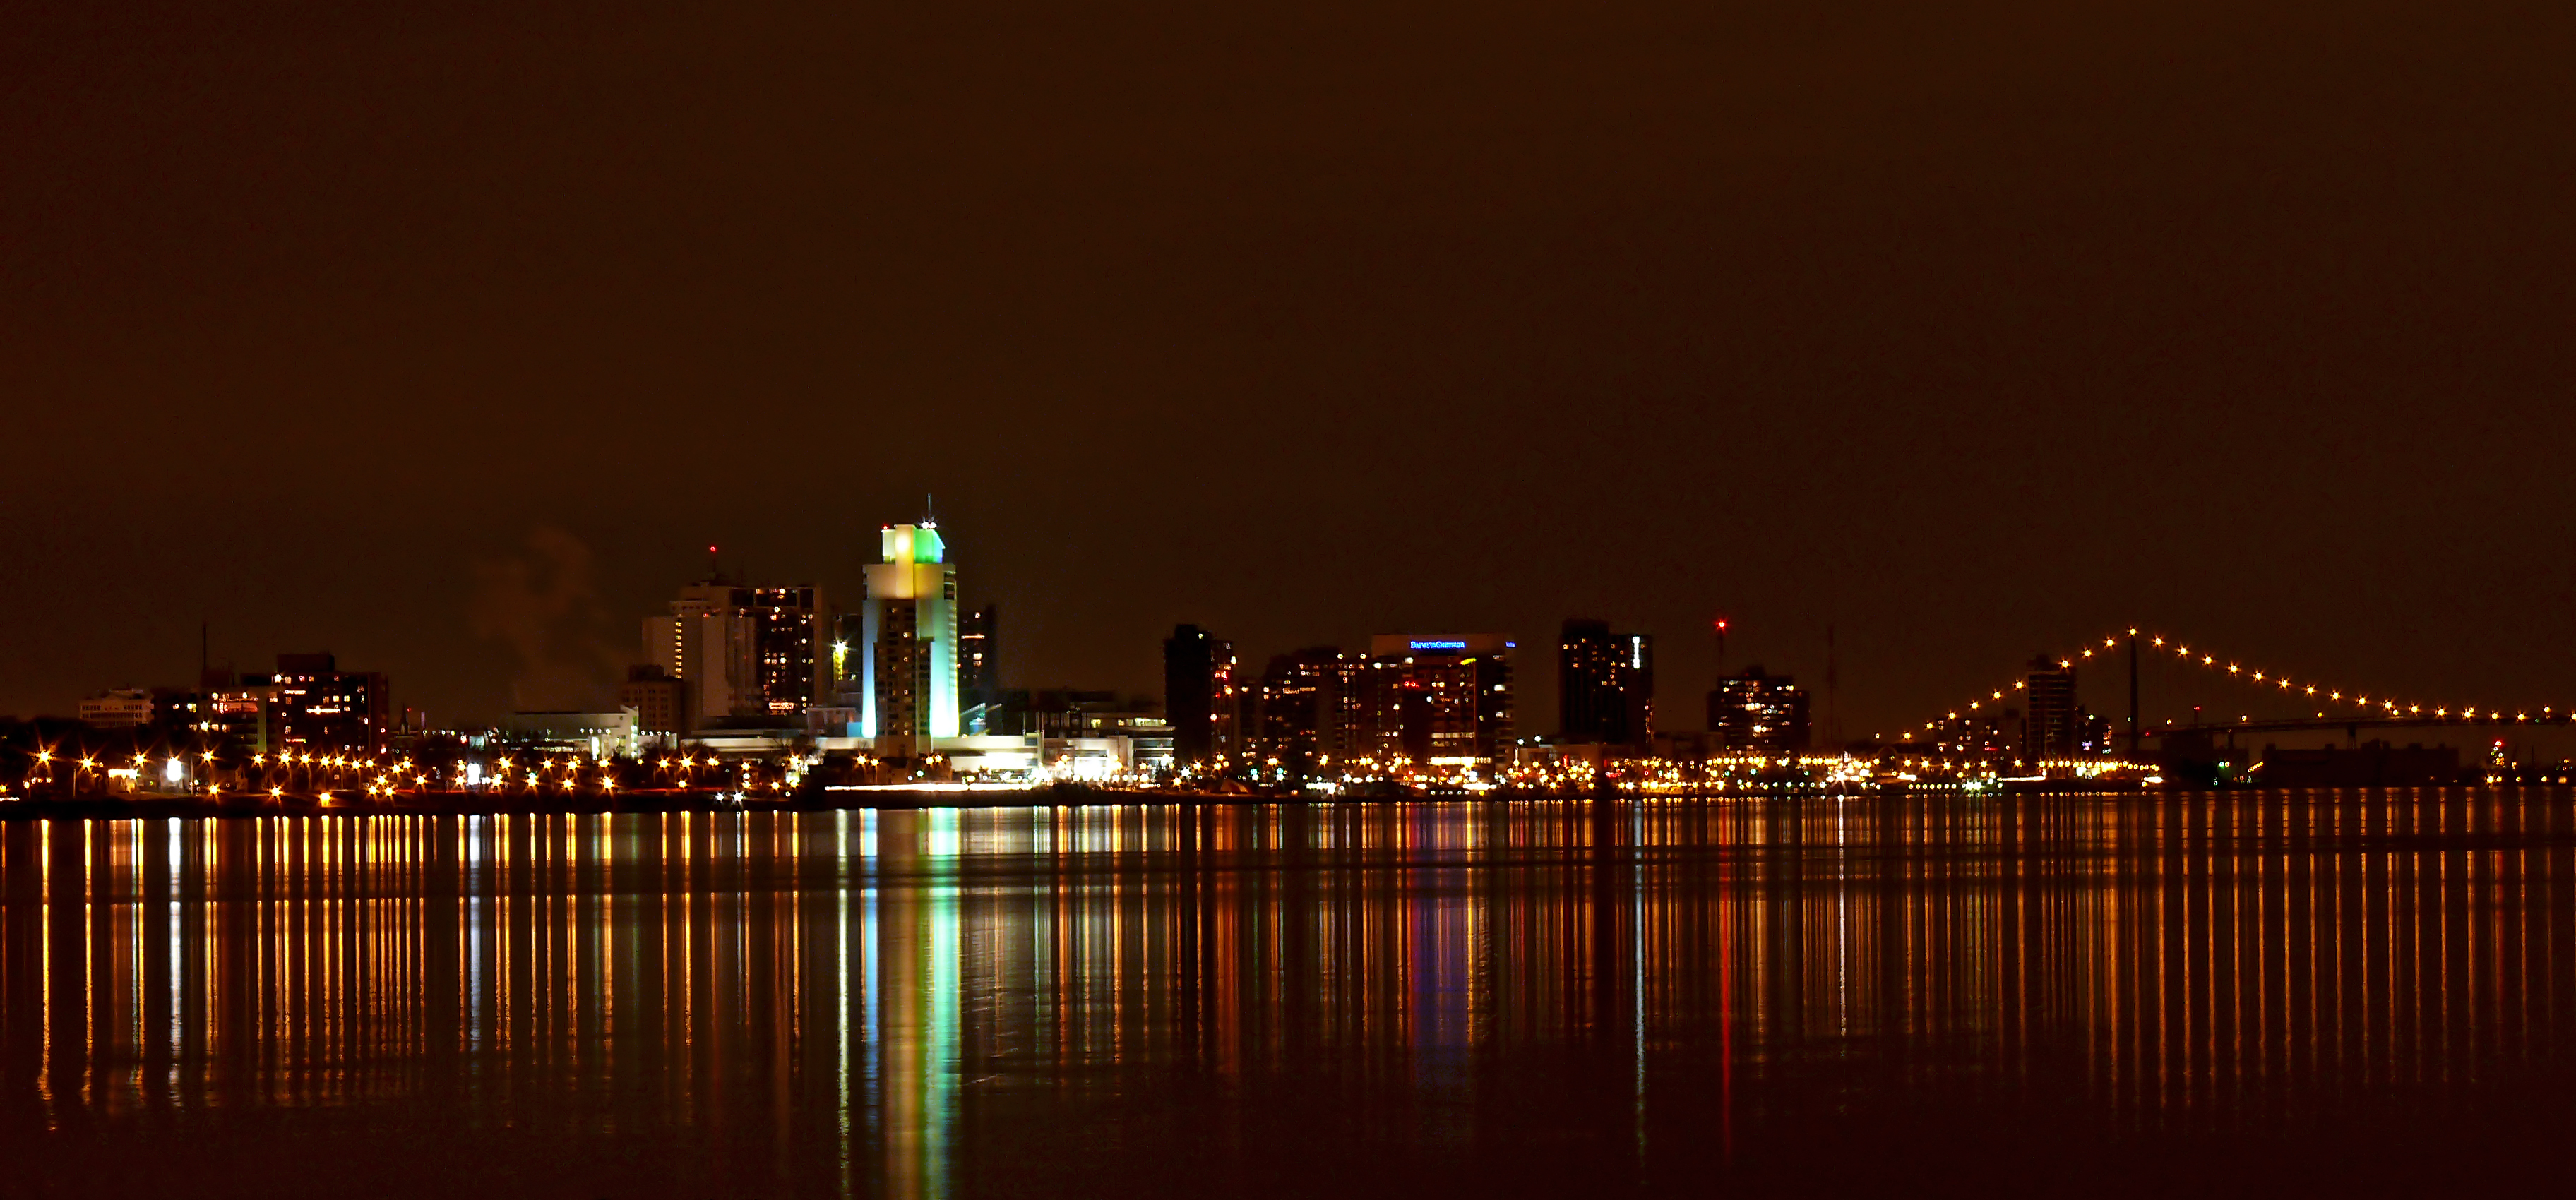 Reflection of Windsor, Canada Skyline at Night